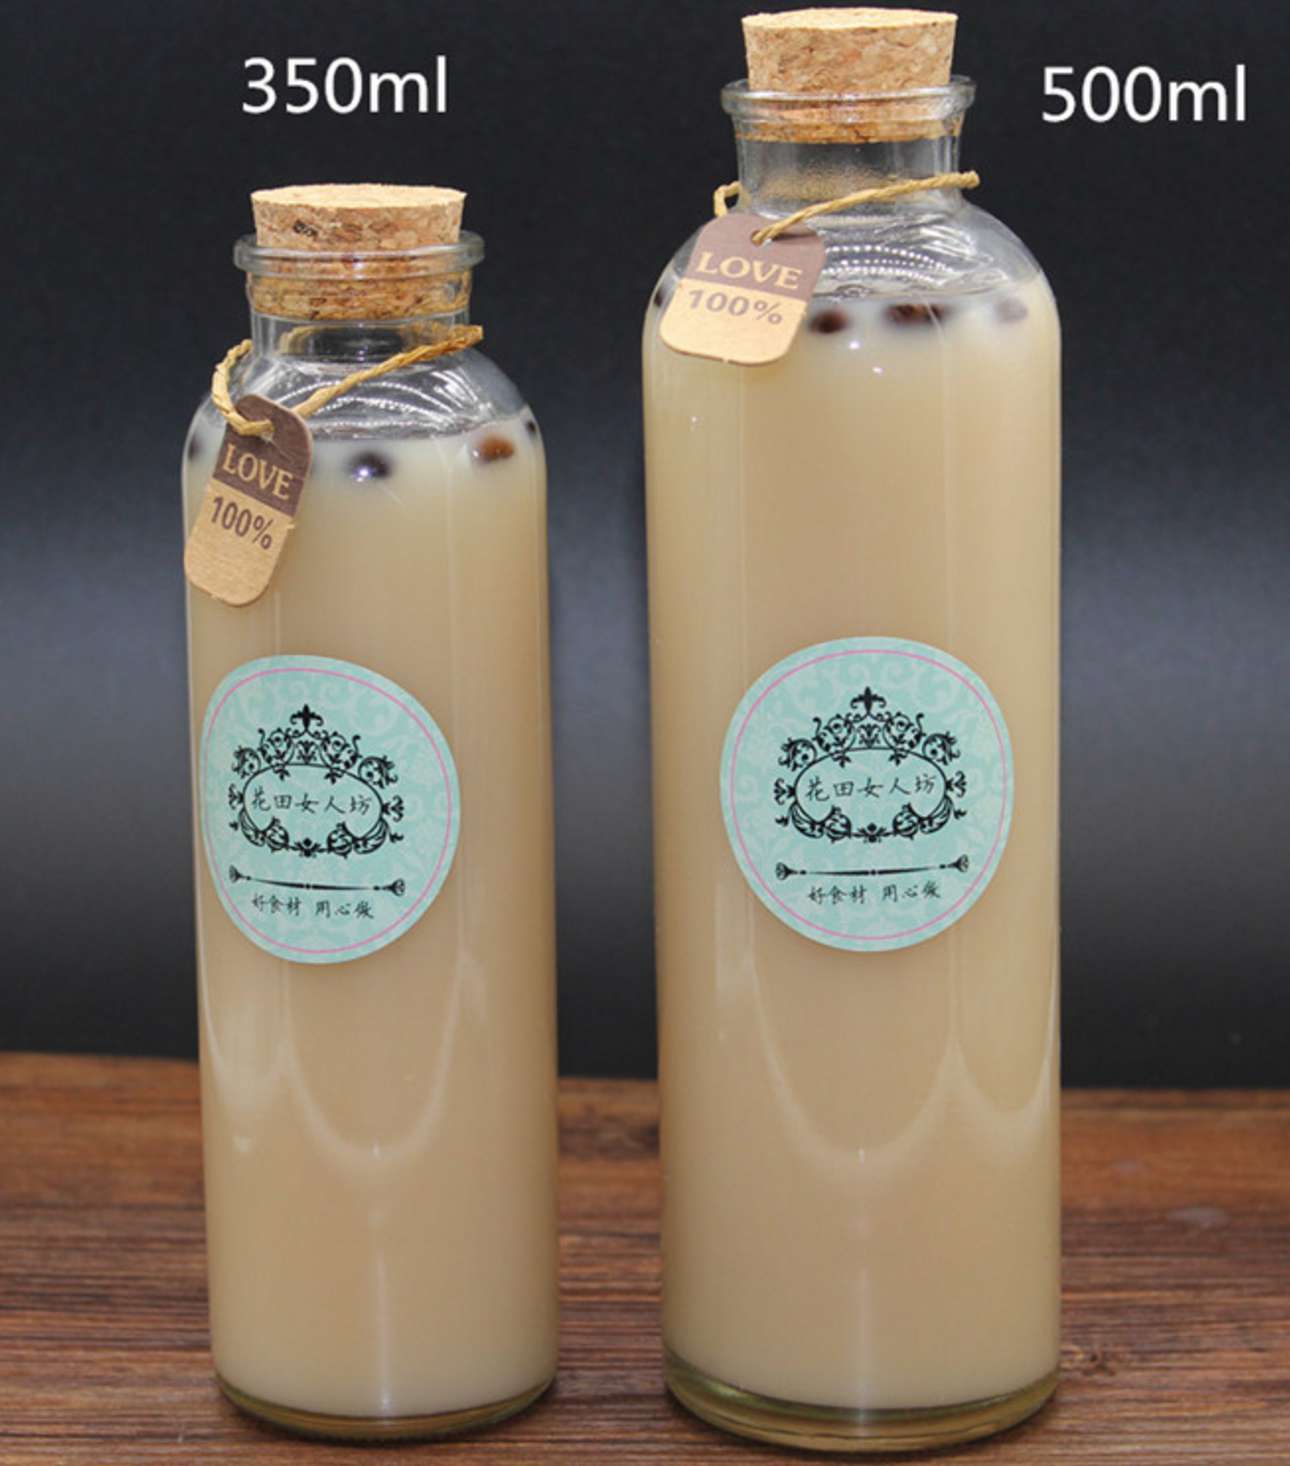 500ml juice glass bottle with cork